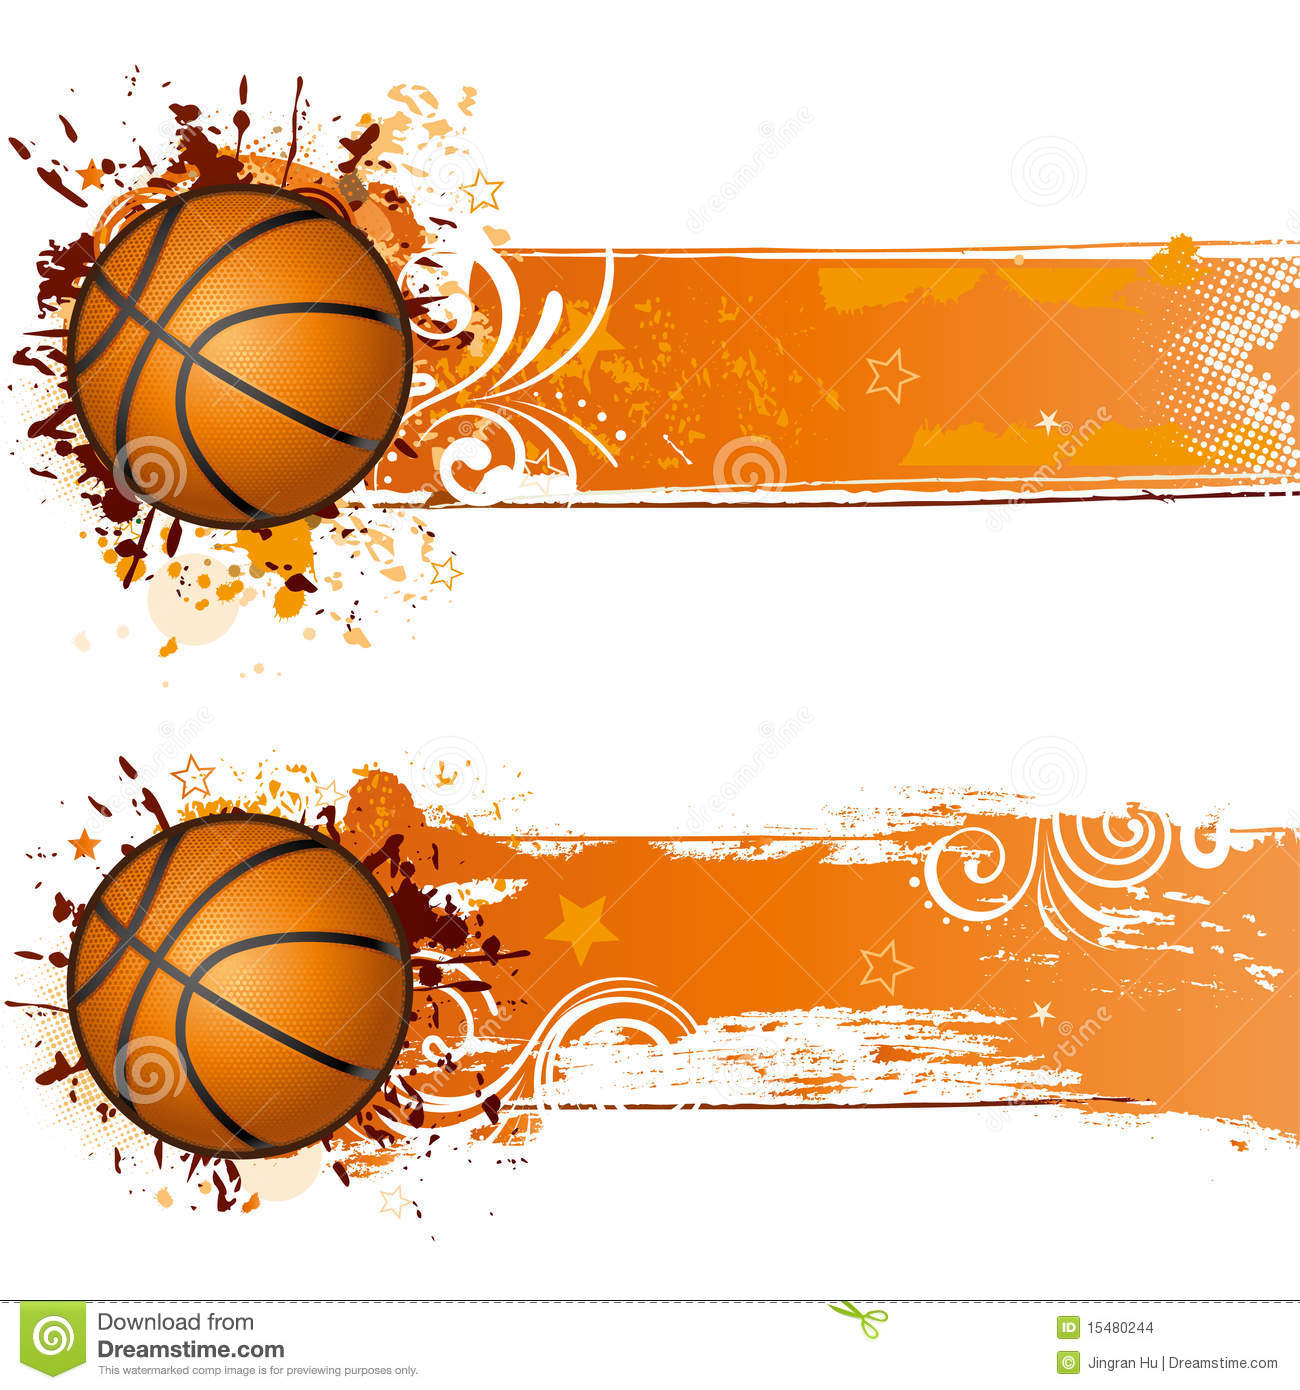 Basketball background Stock Images